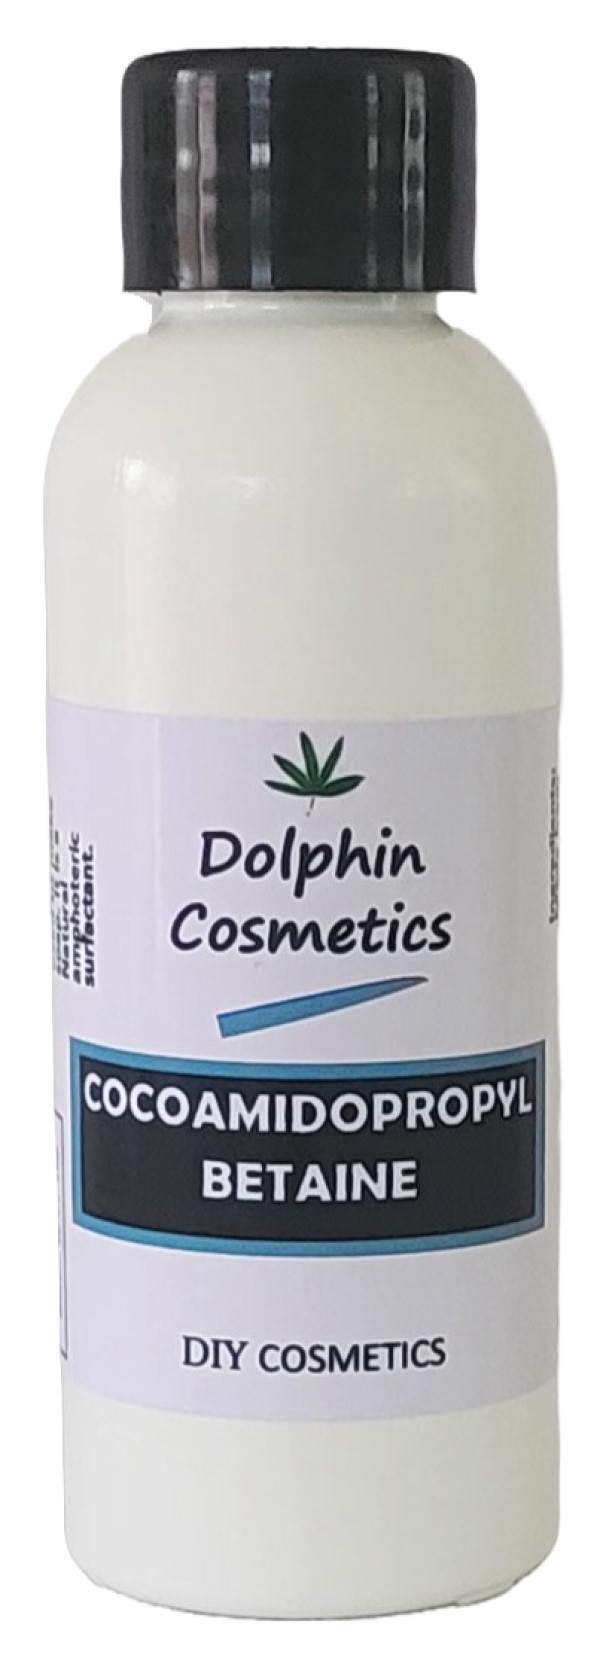 dolphin-cosmetics-cocoamidopropyl-betaine------